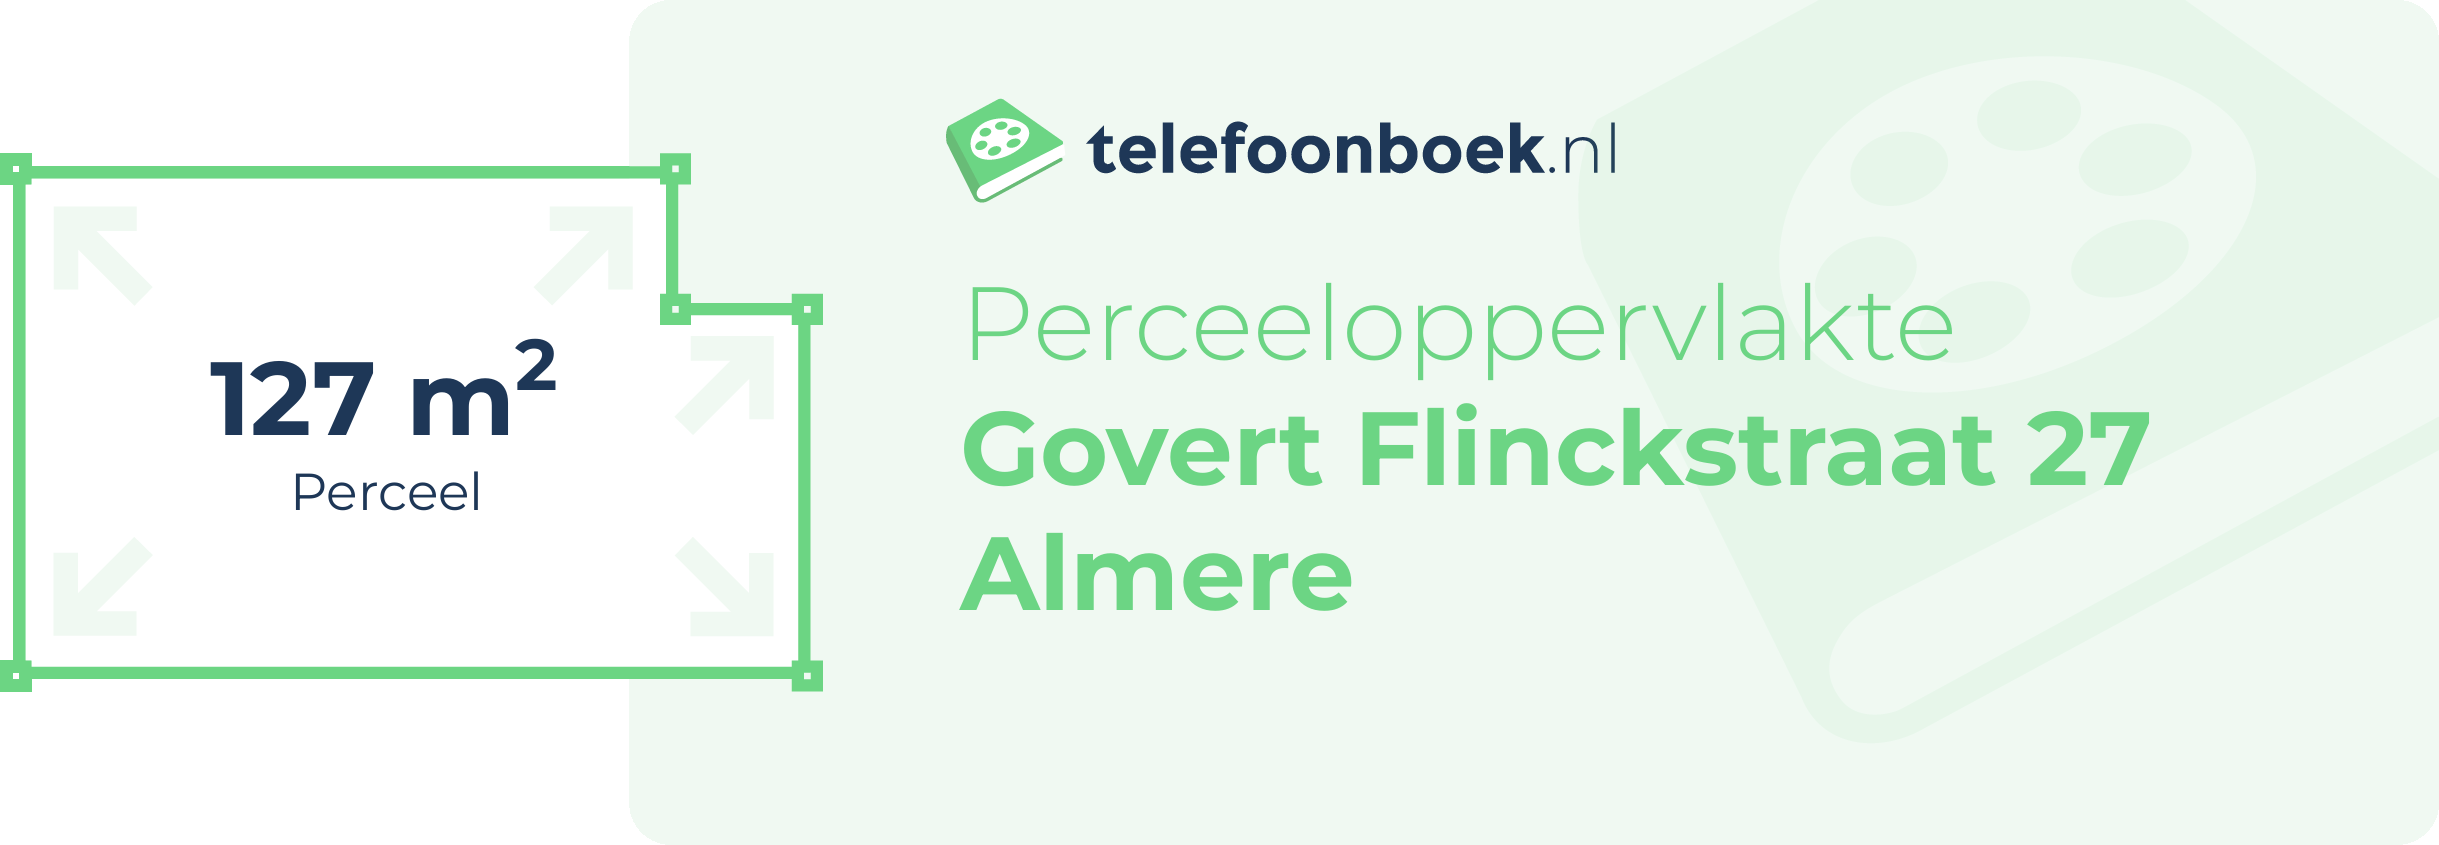 Perceeloppervlakte Govert Flinckstraat 27 Almere